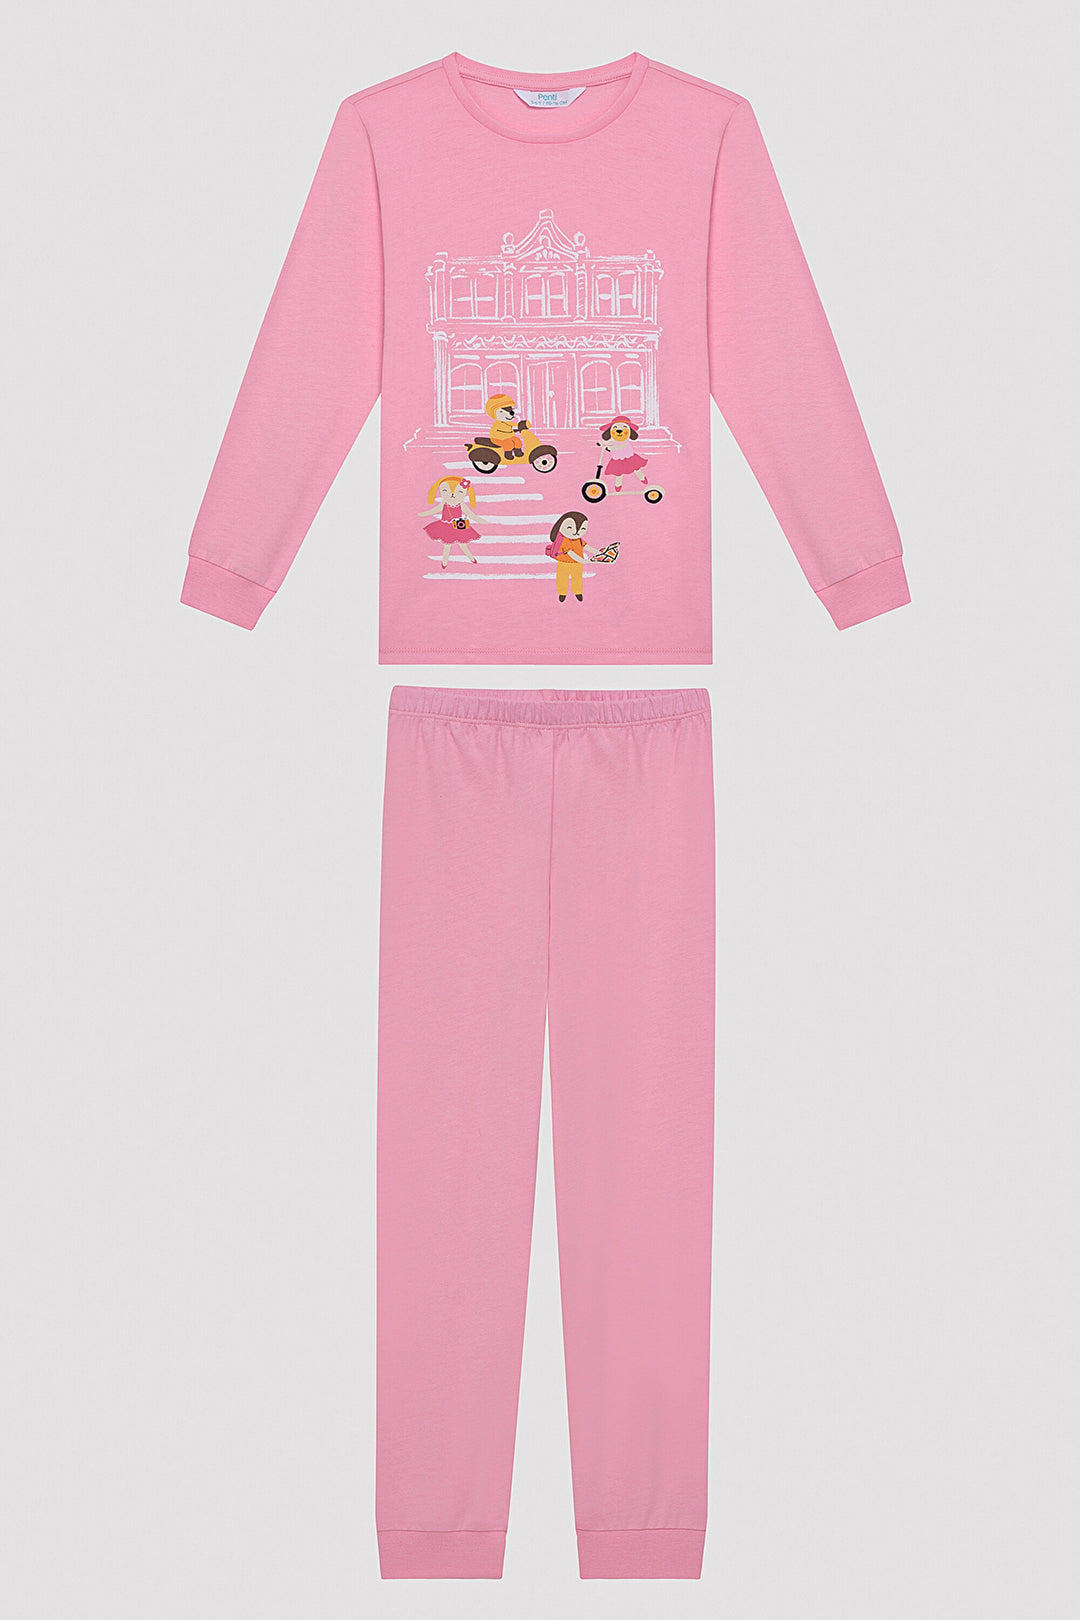 Girls Visit Museum Multicolored 2-Piece Pajama Set